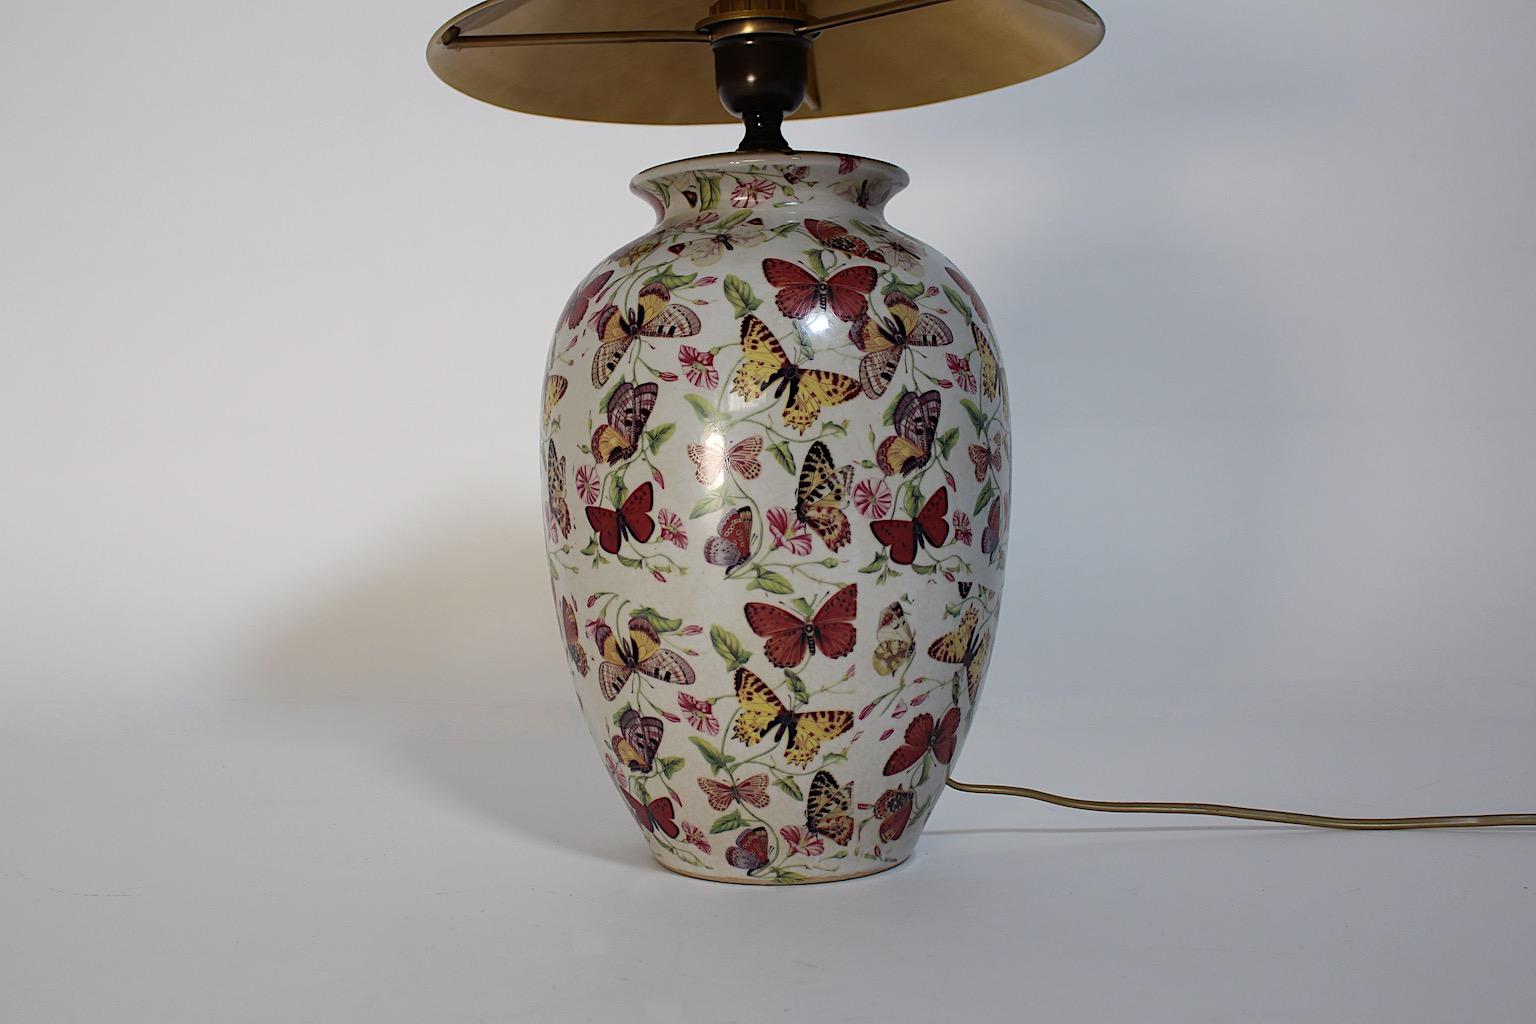 Modern Vintage Ceramic Brass Table Lamp Animal Butterfly Flowers Farfalle 1980s For Sale 7